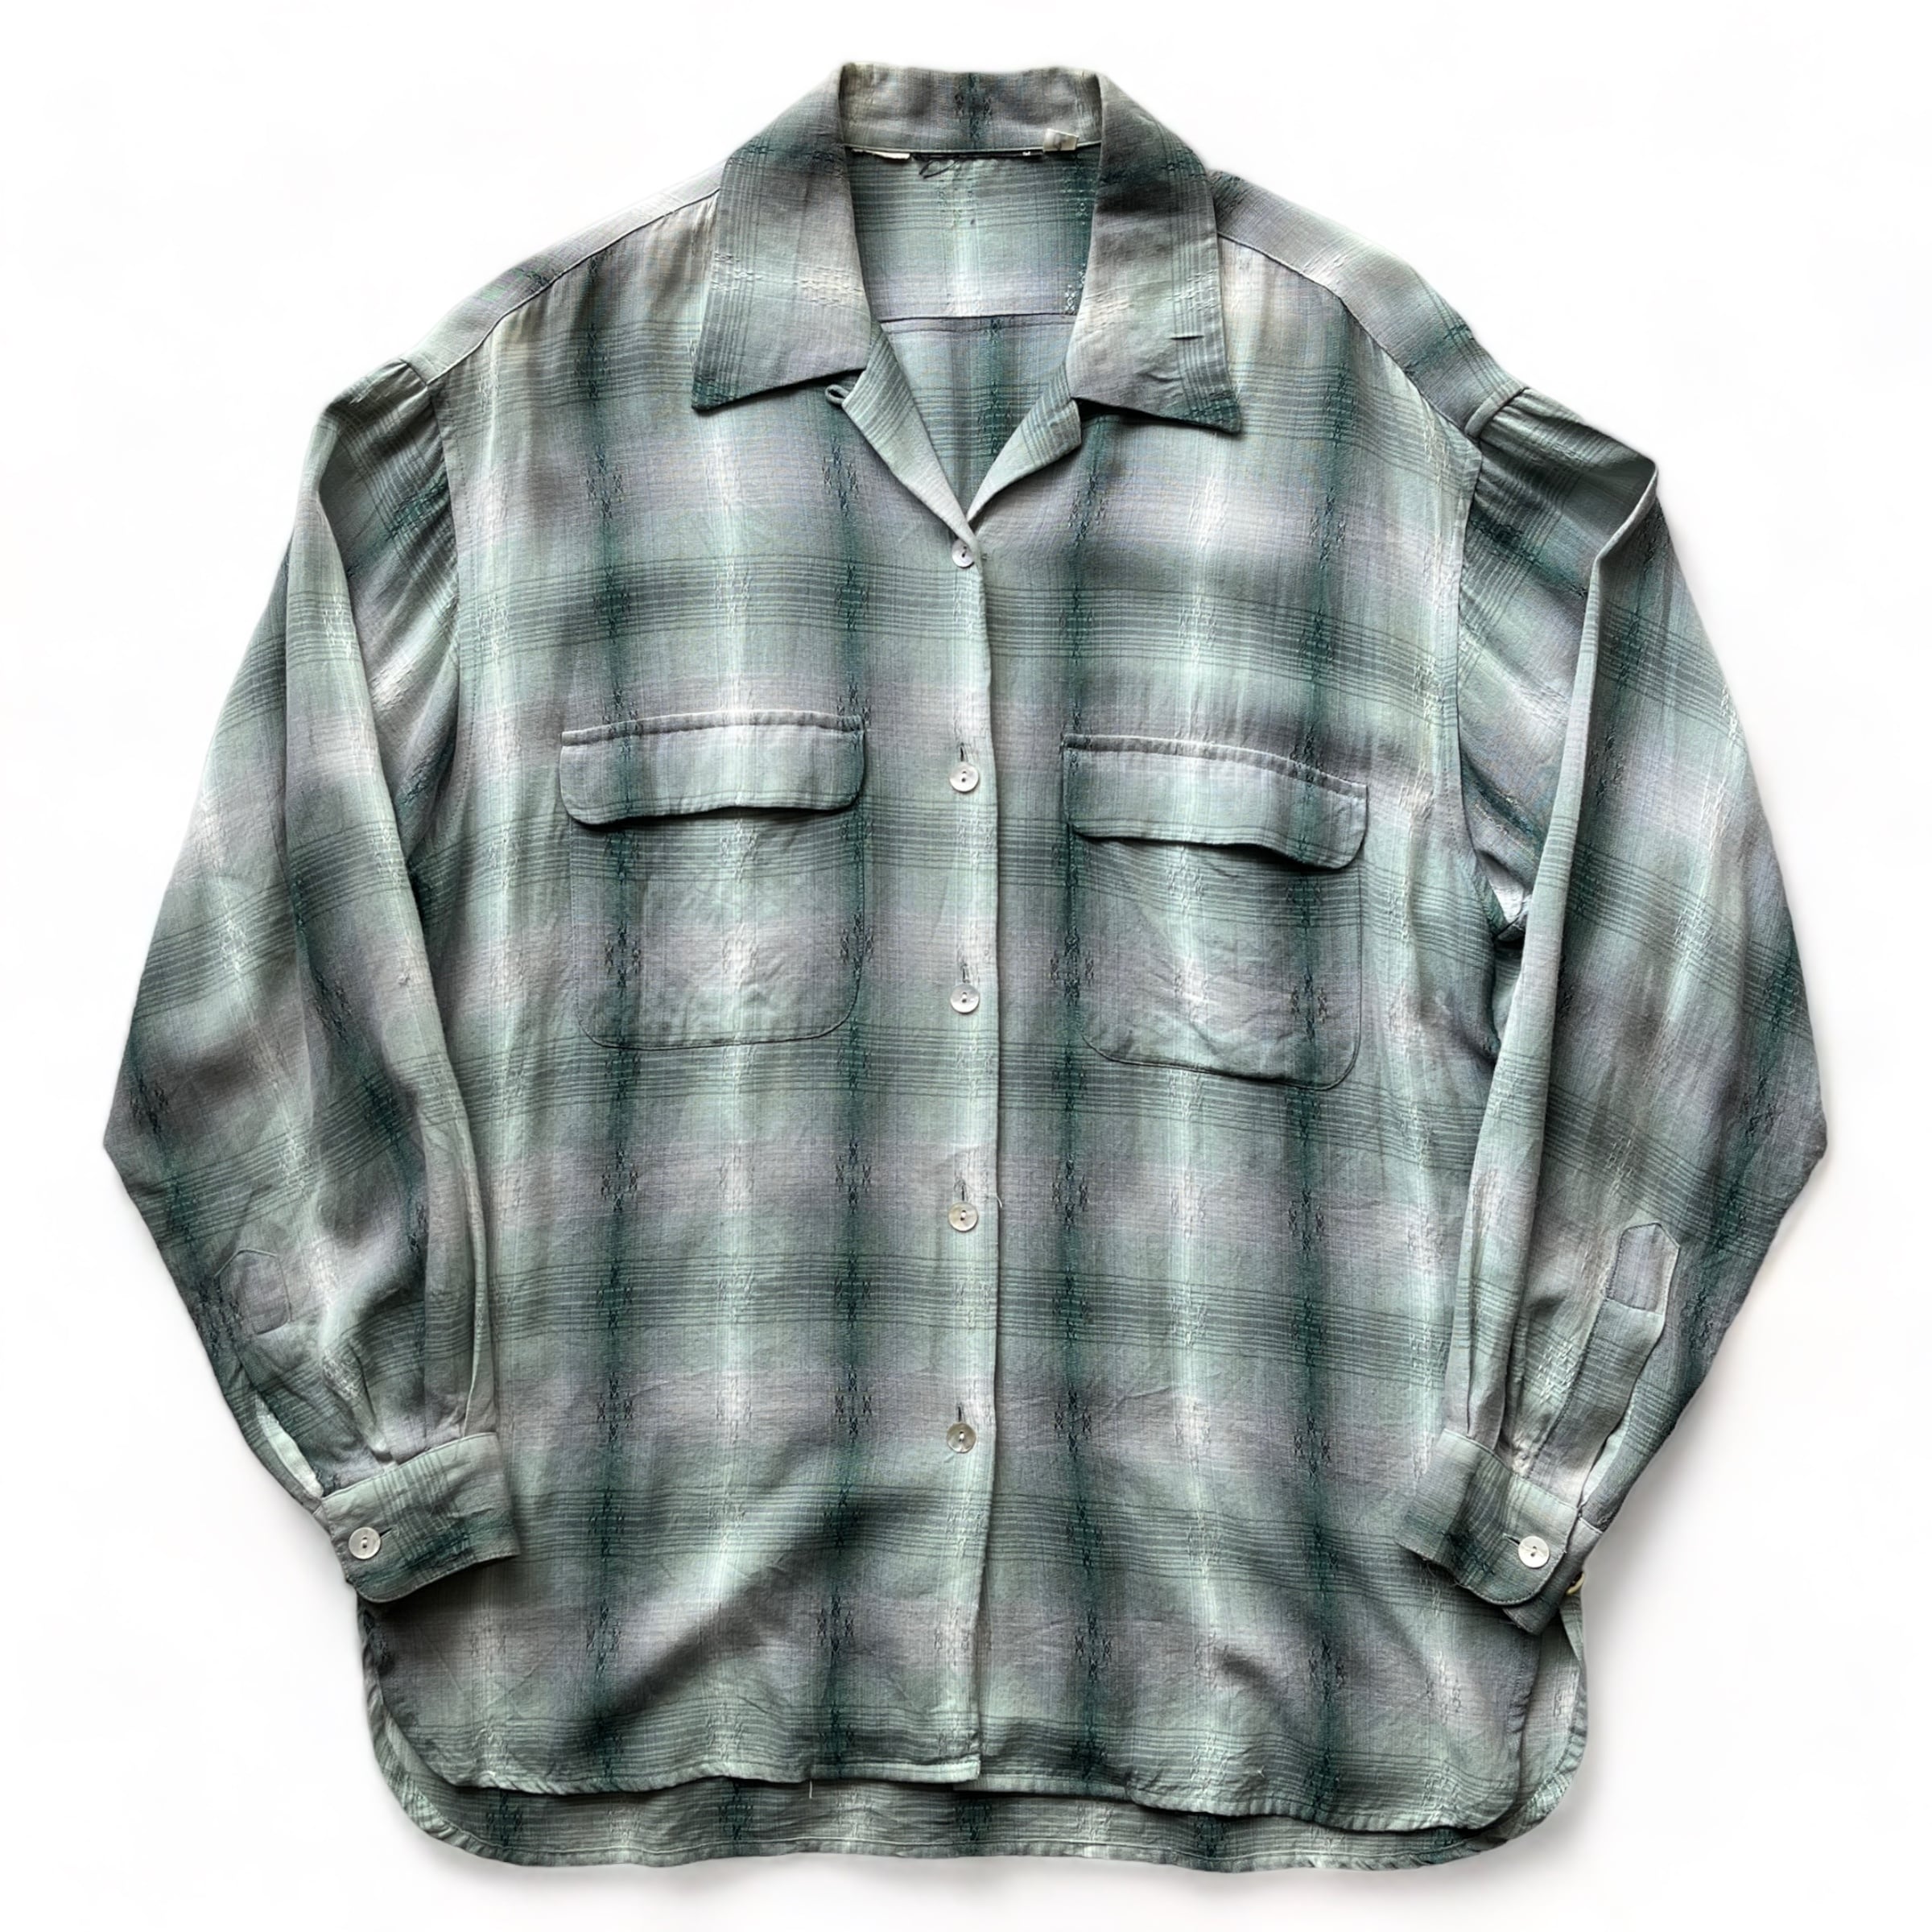 1960's vintage ombre rayon shirt / 60年代 ビンテージ オンブレシャドーチェック レーヨンシャツ ジェルボタン  レディース合わせ